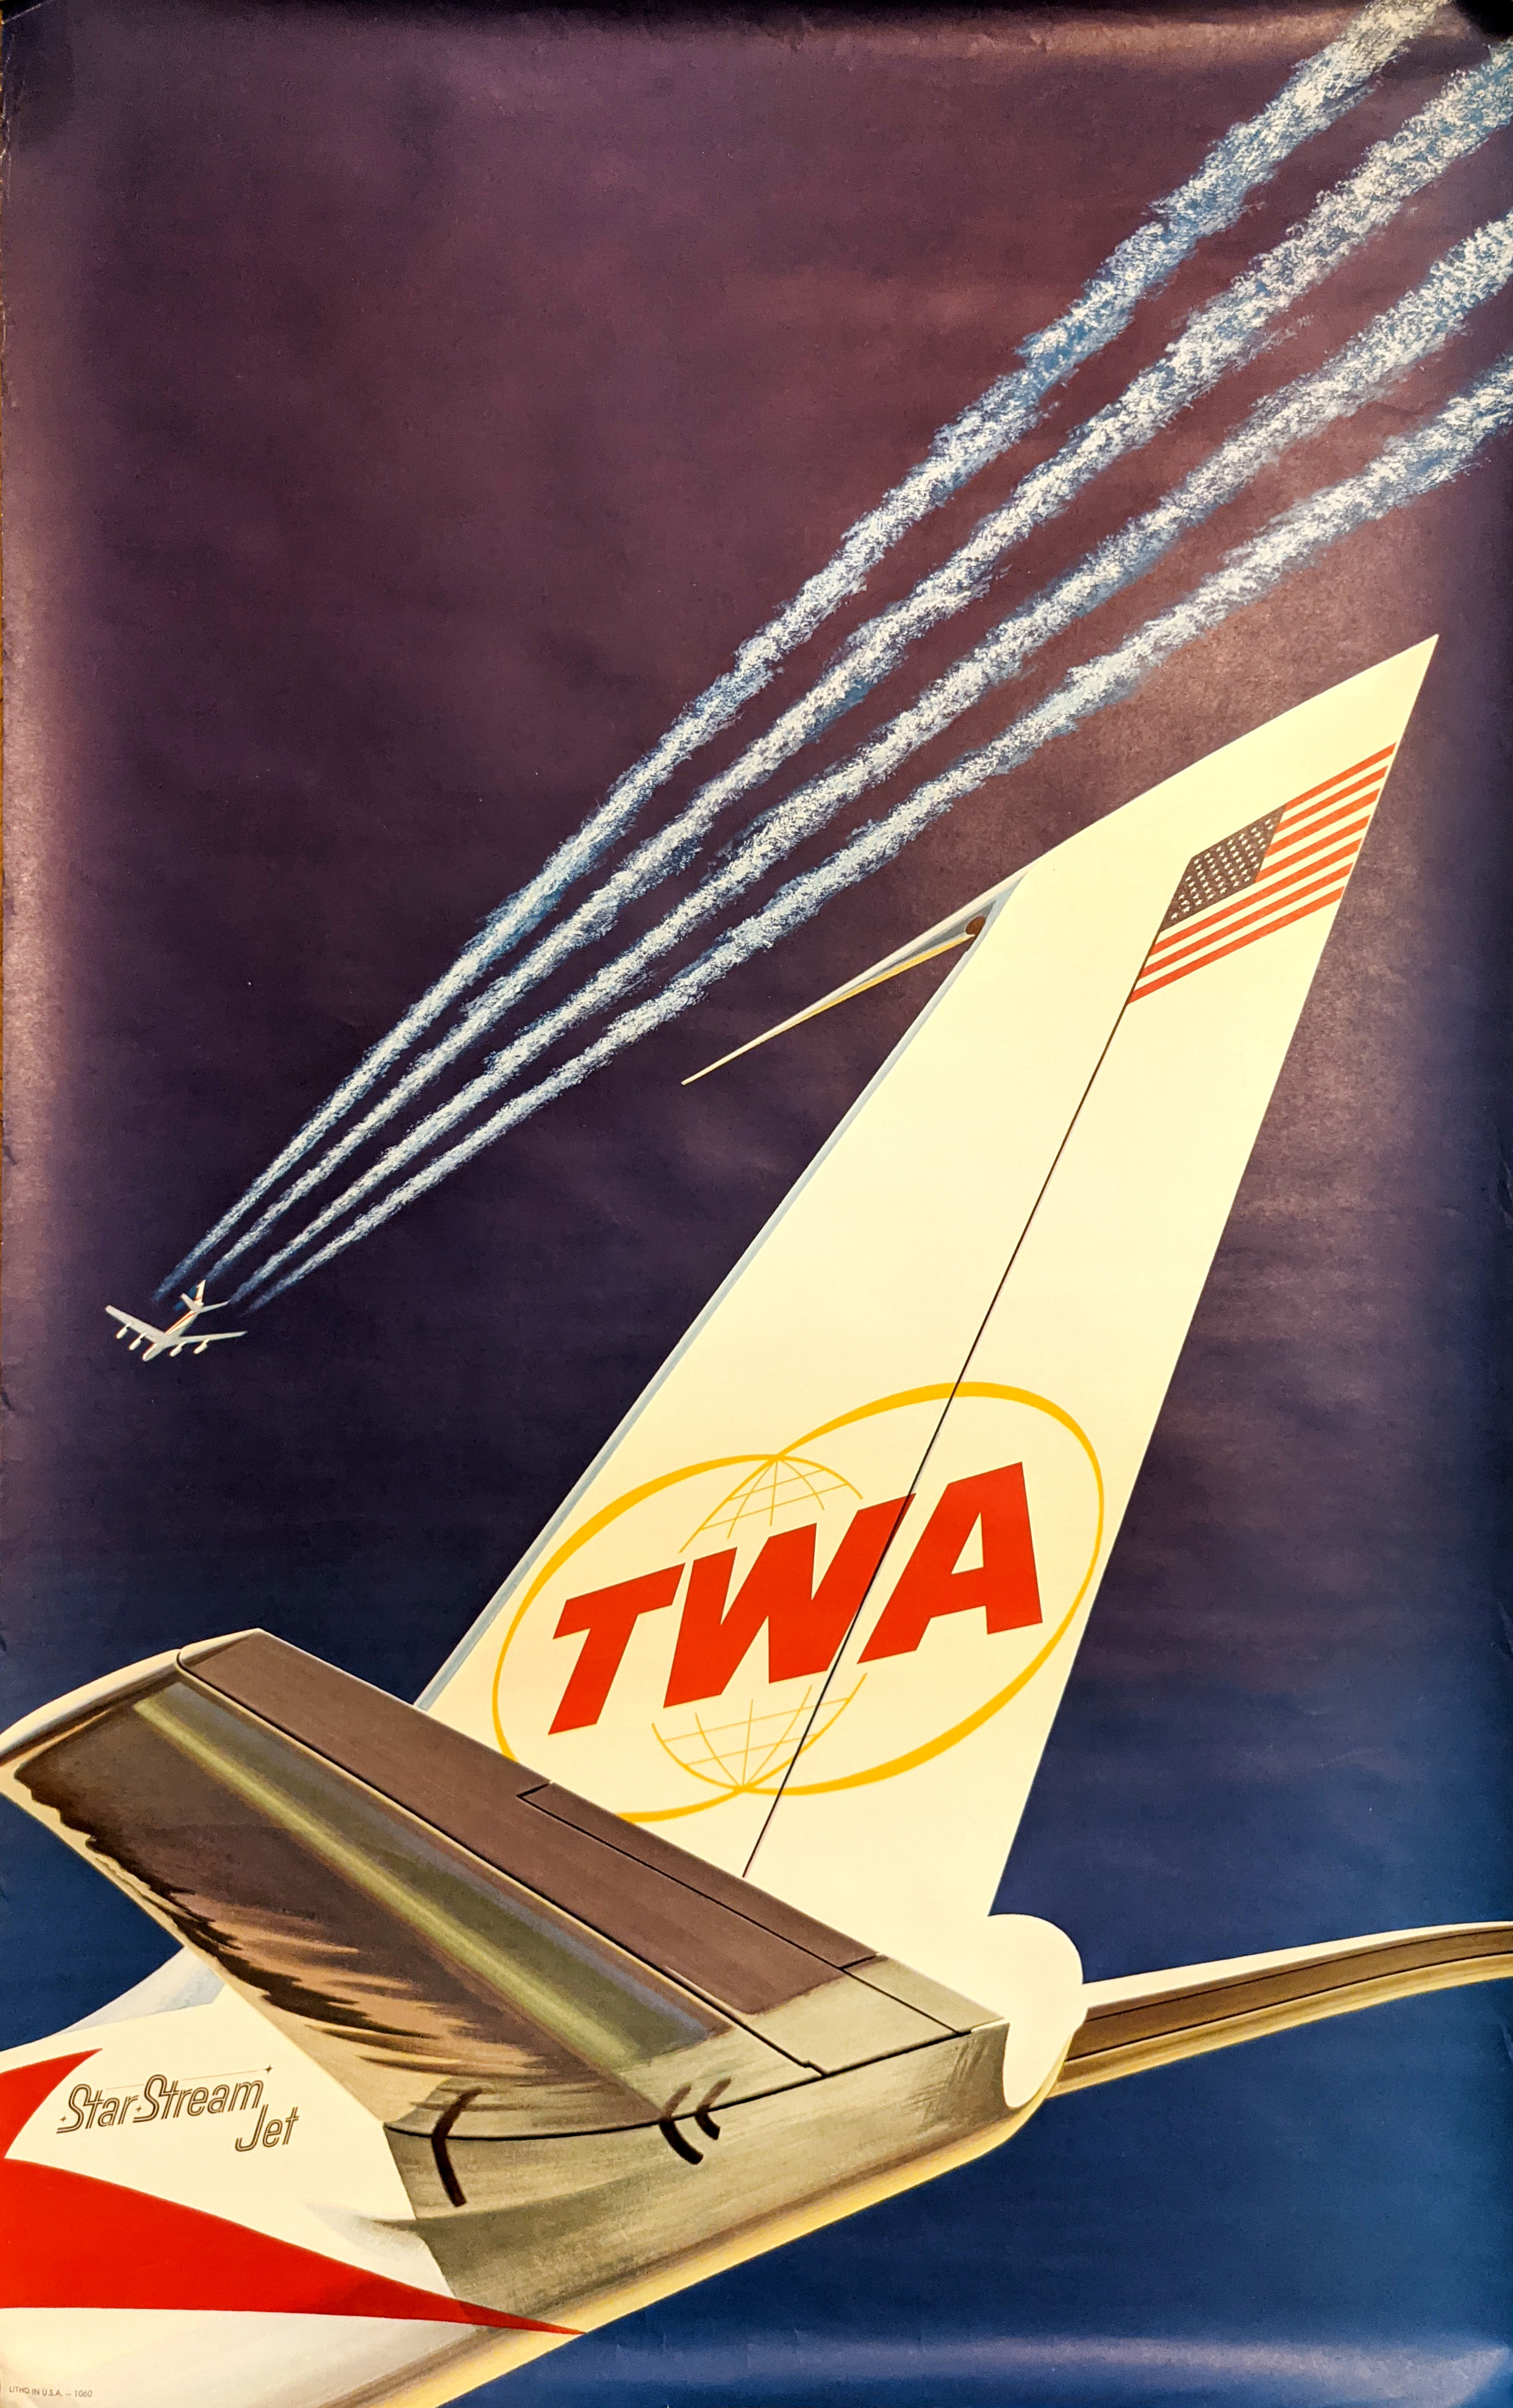 Fly TWA New York / David. - digital file from original item